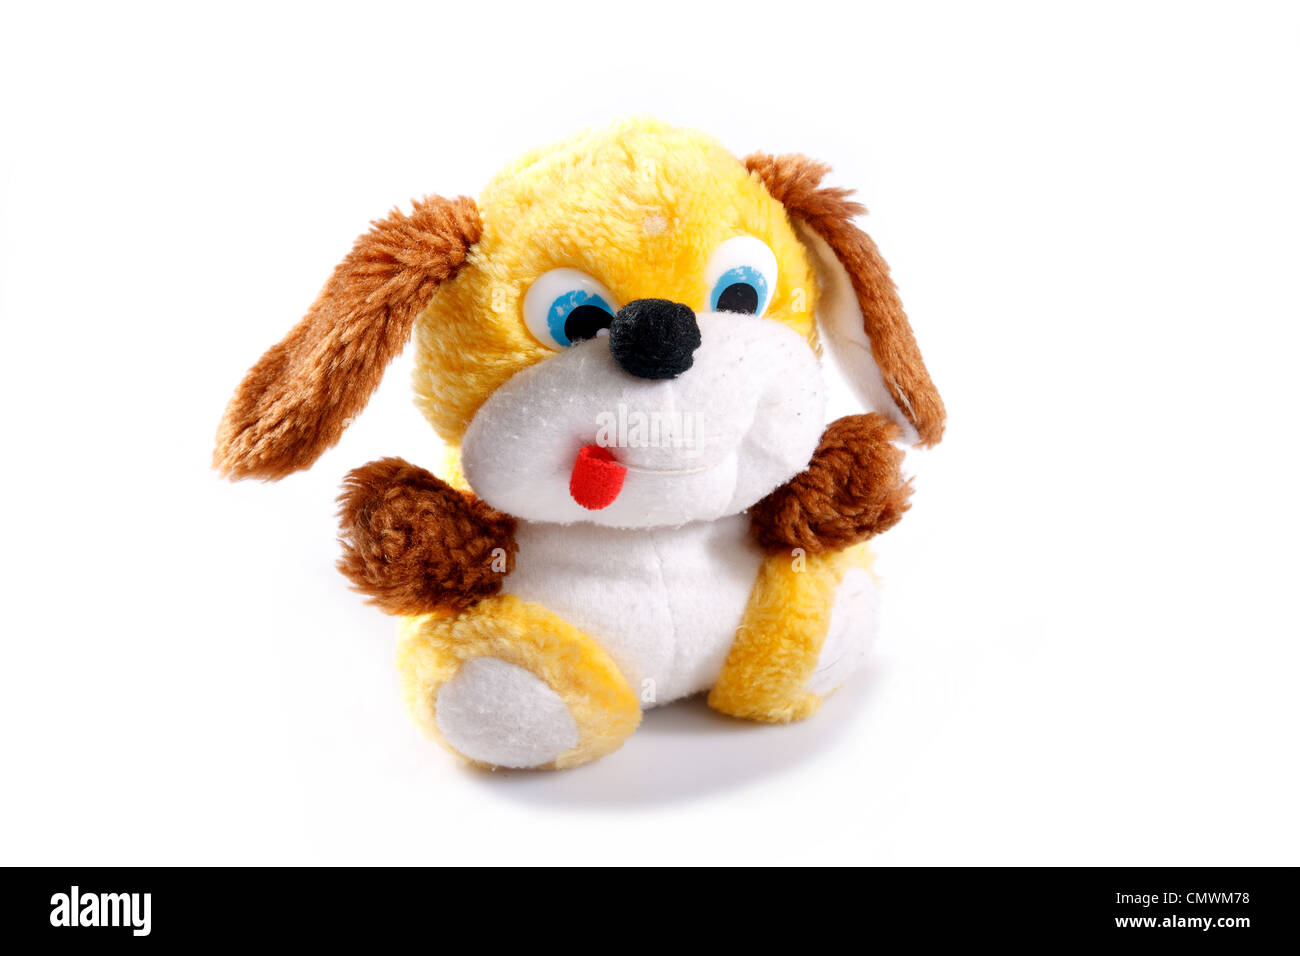 old children's toy dog on white background Stock Photo